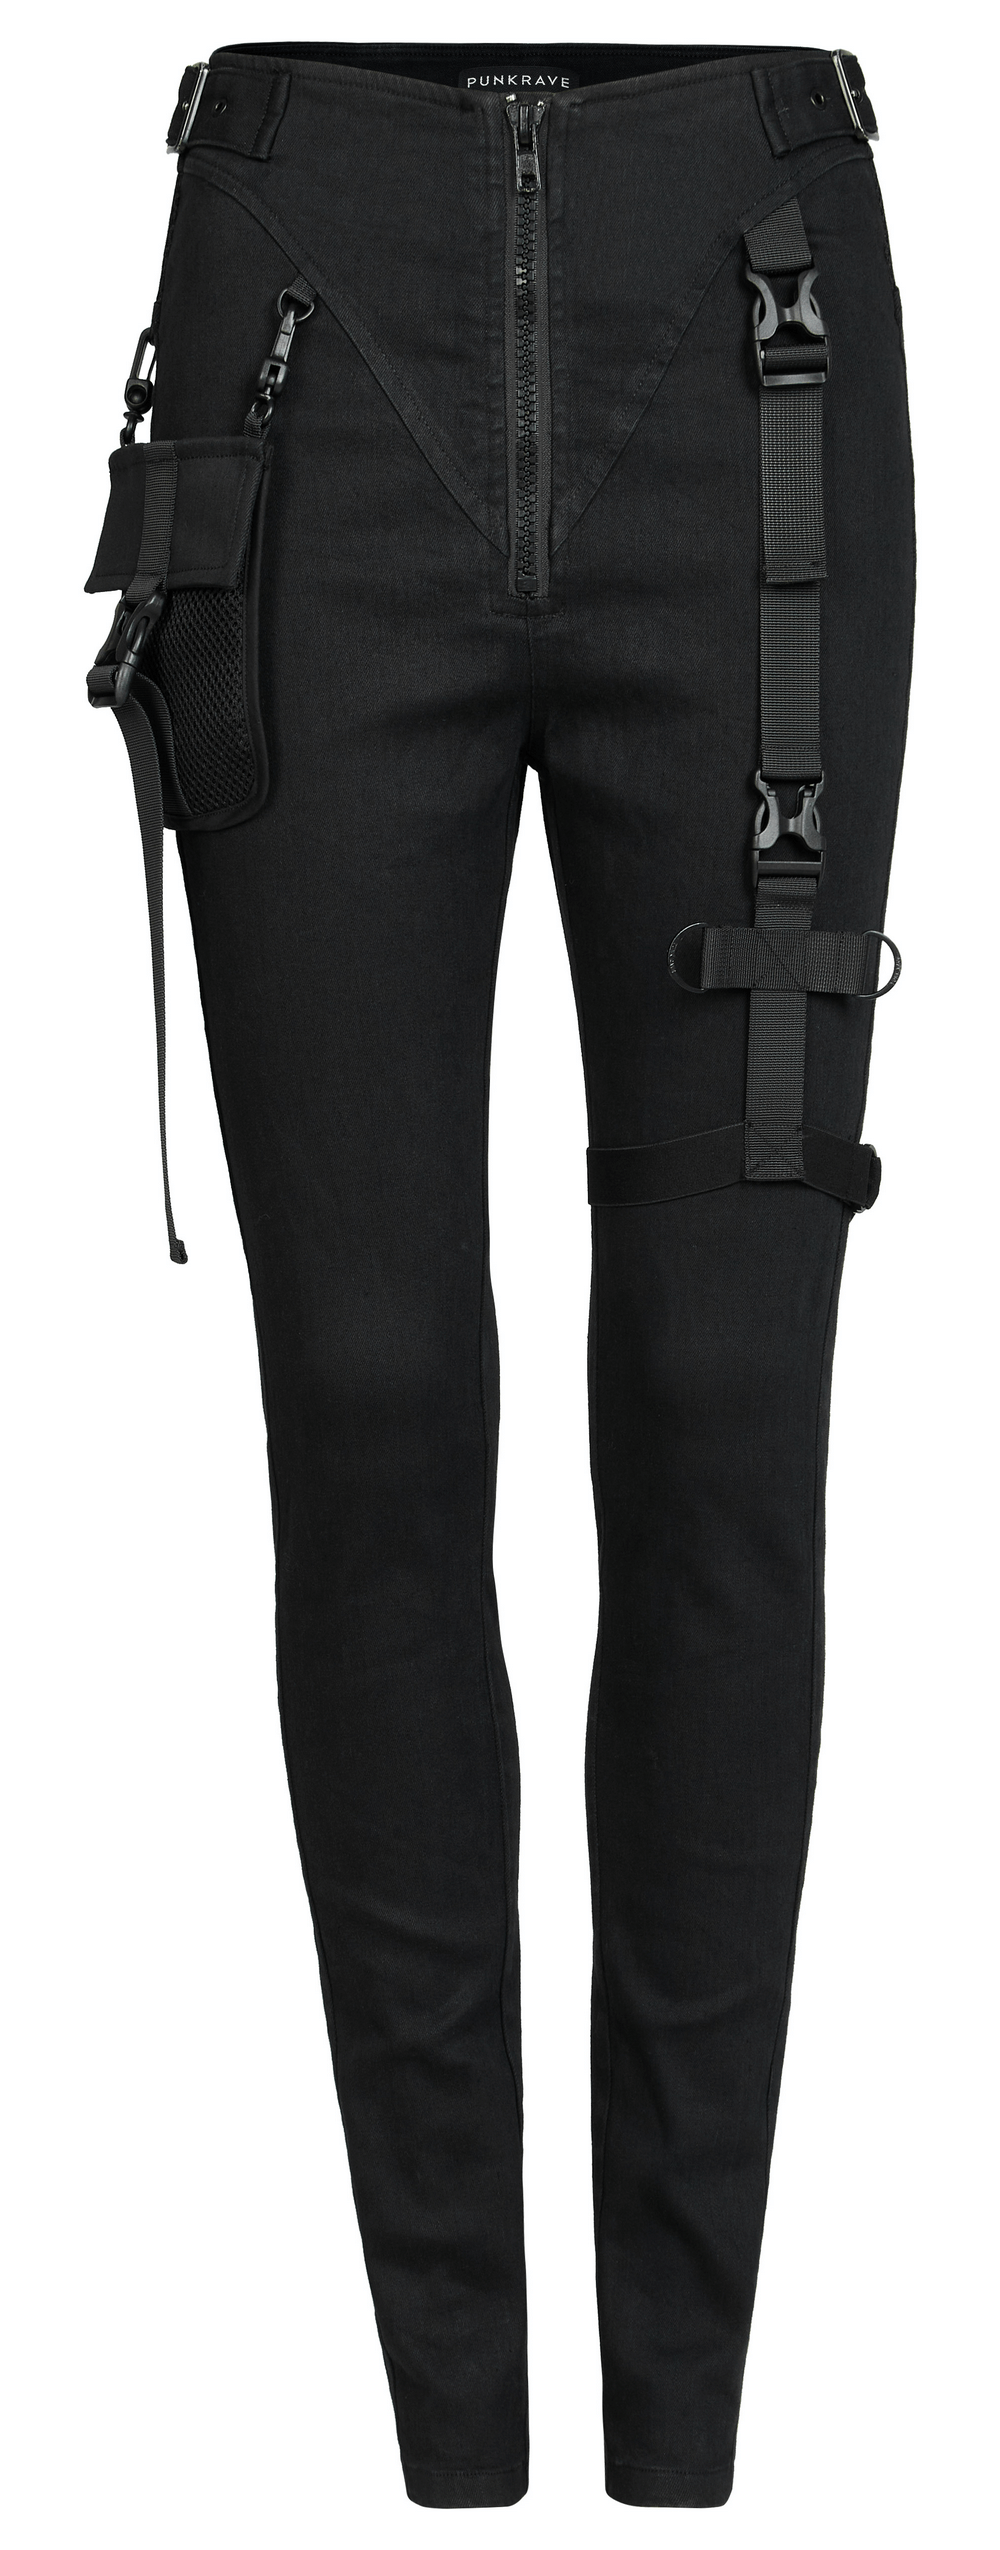 Urban Techwear Denim Pants with Adjustable Straps